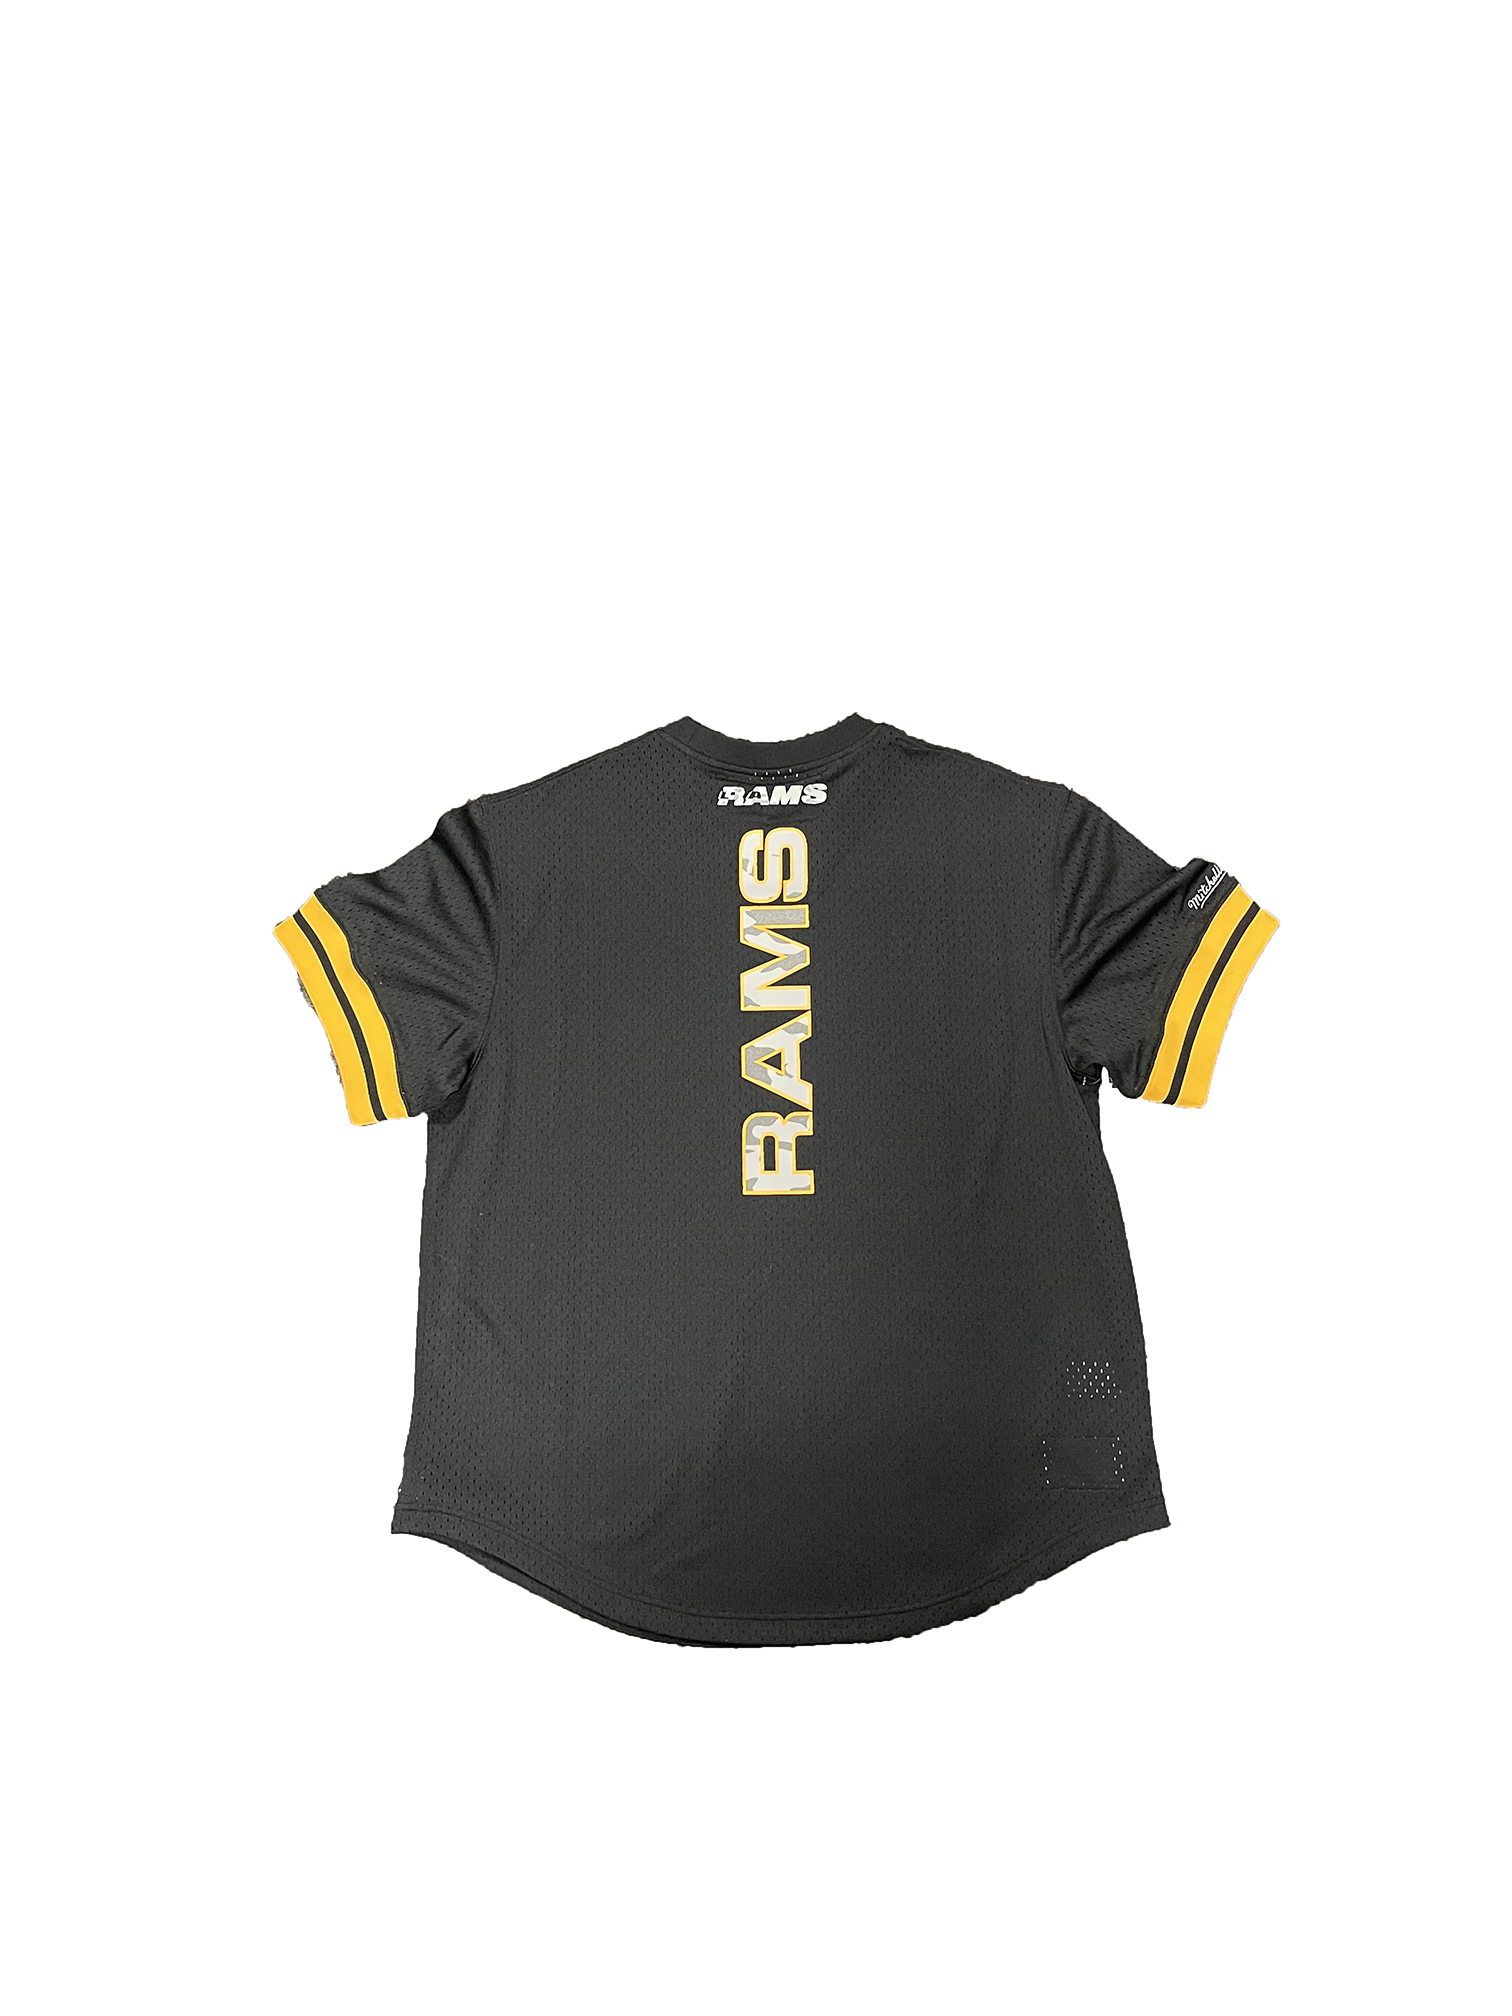 Los Angeles Rams Men's Camo Reflective Mesh Shirt 22 / 3XL